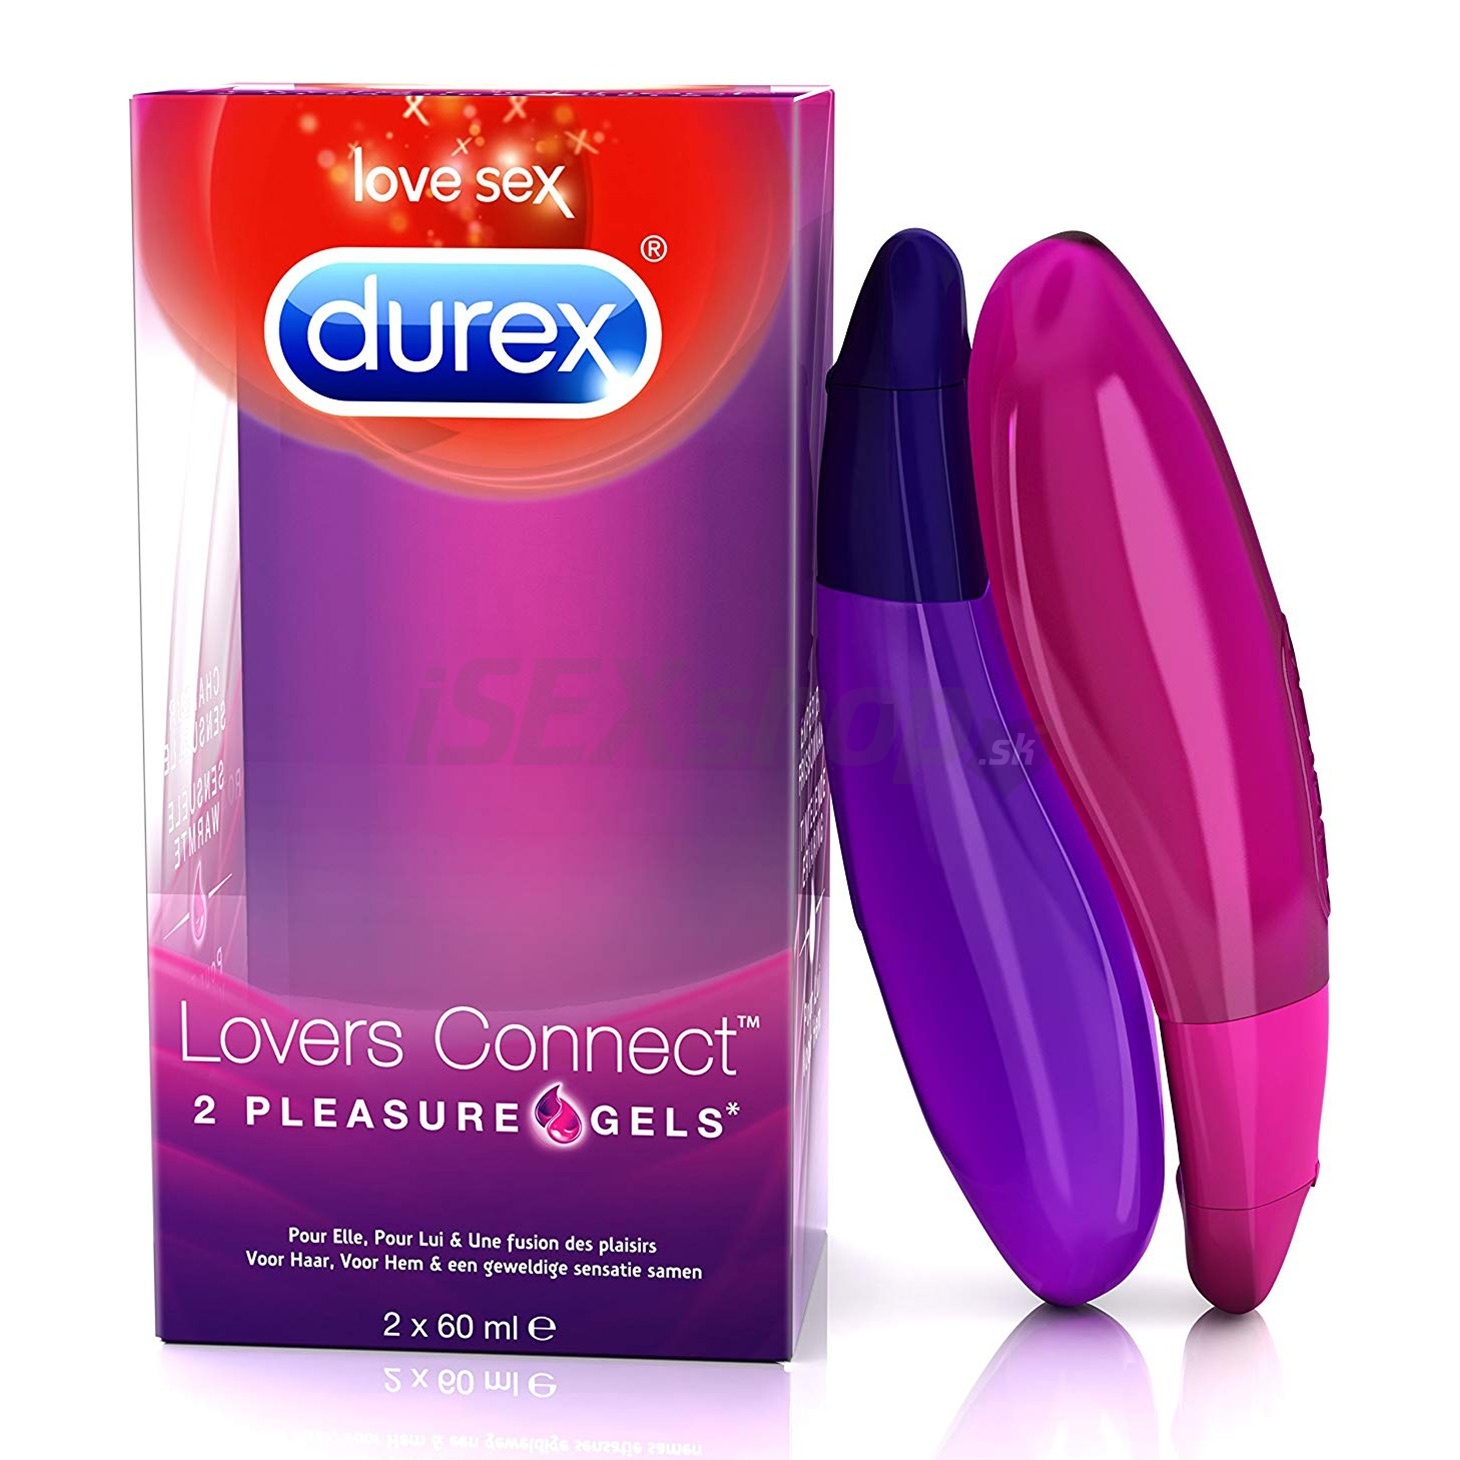 Durex Sex Lubricants Lotions For Sale